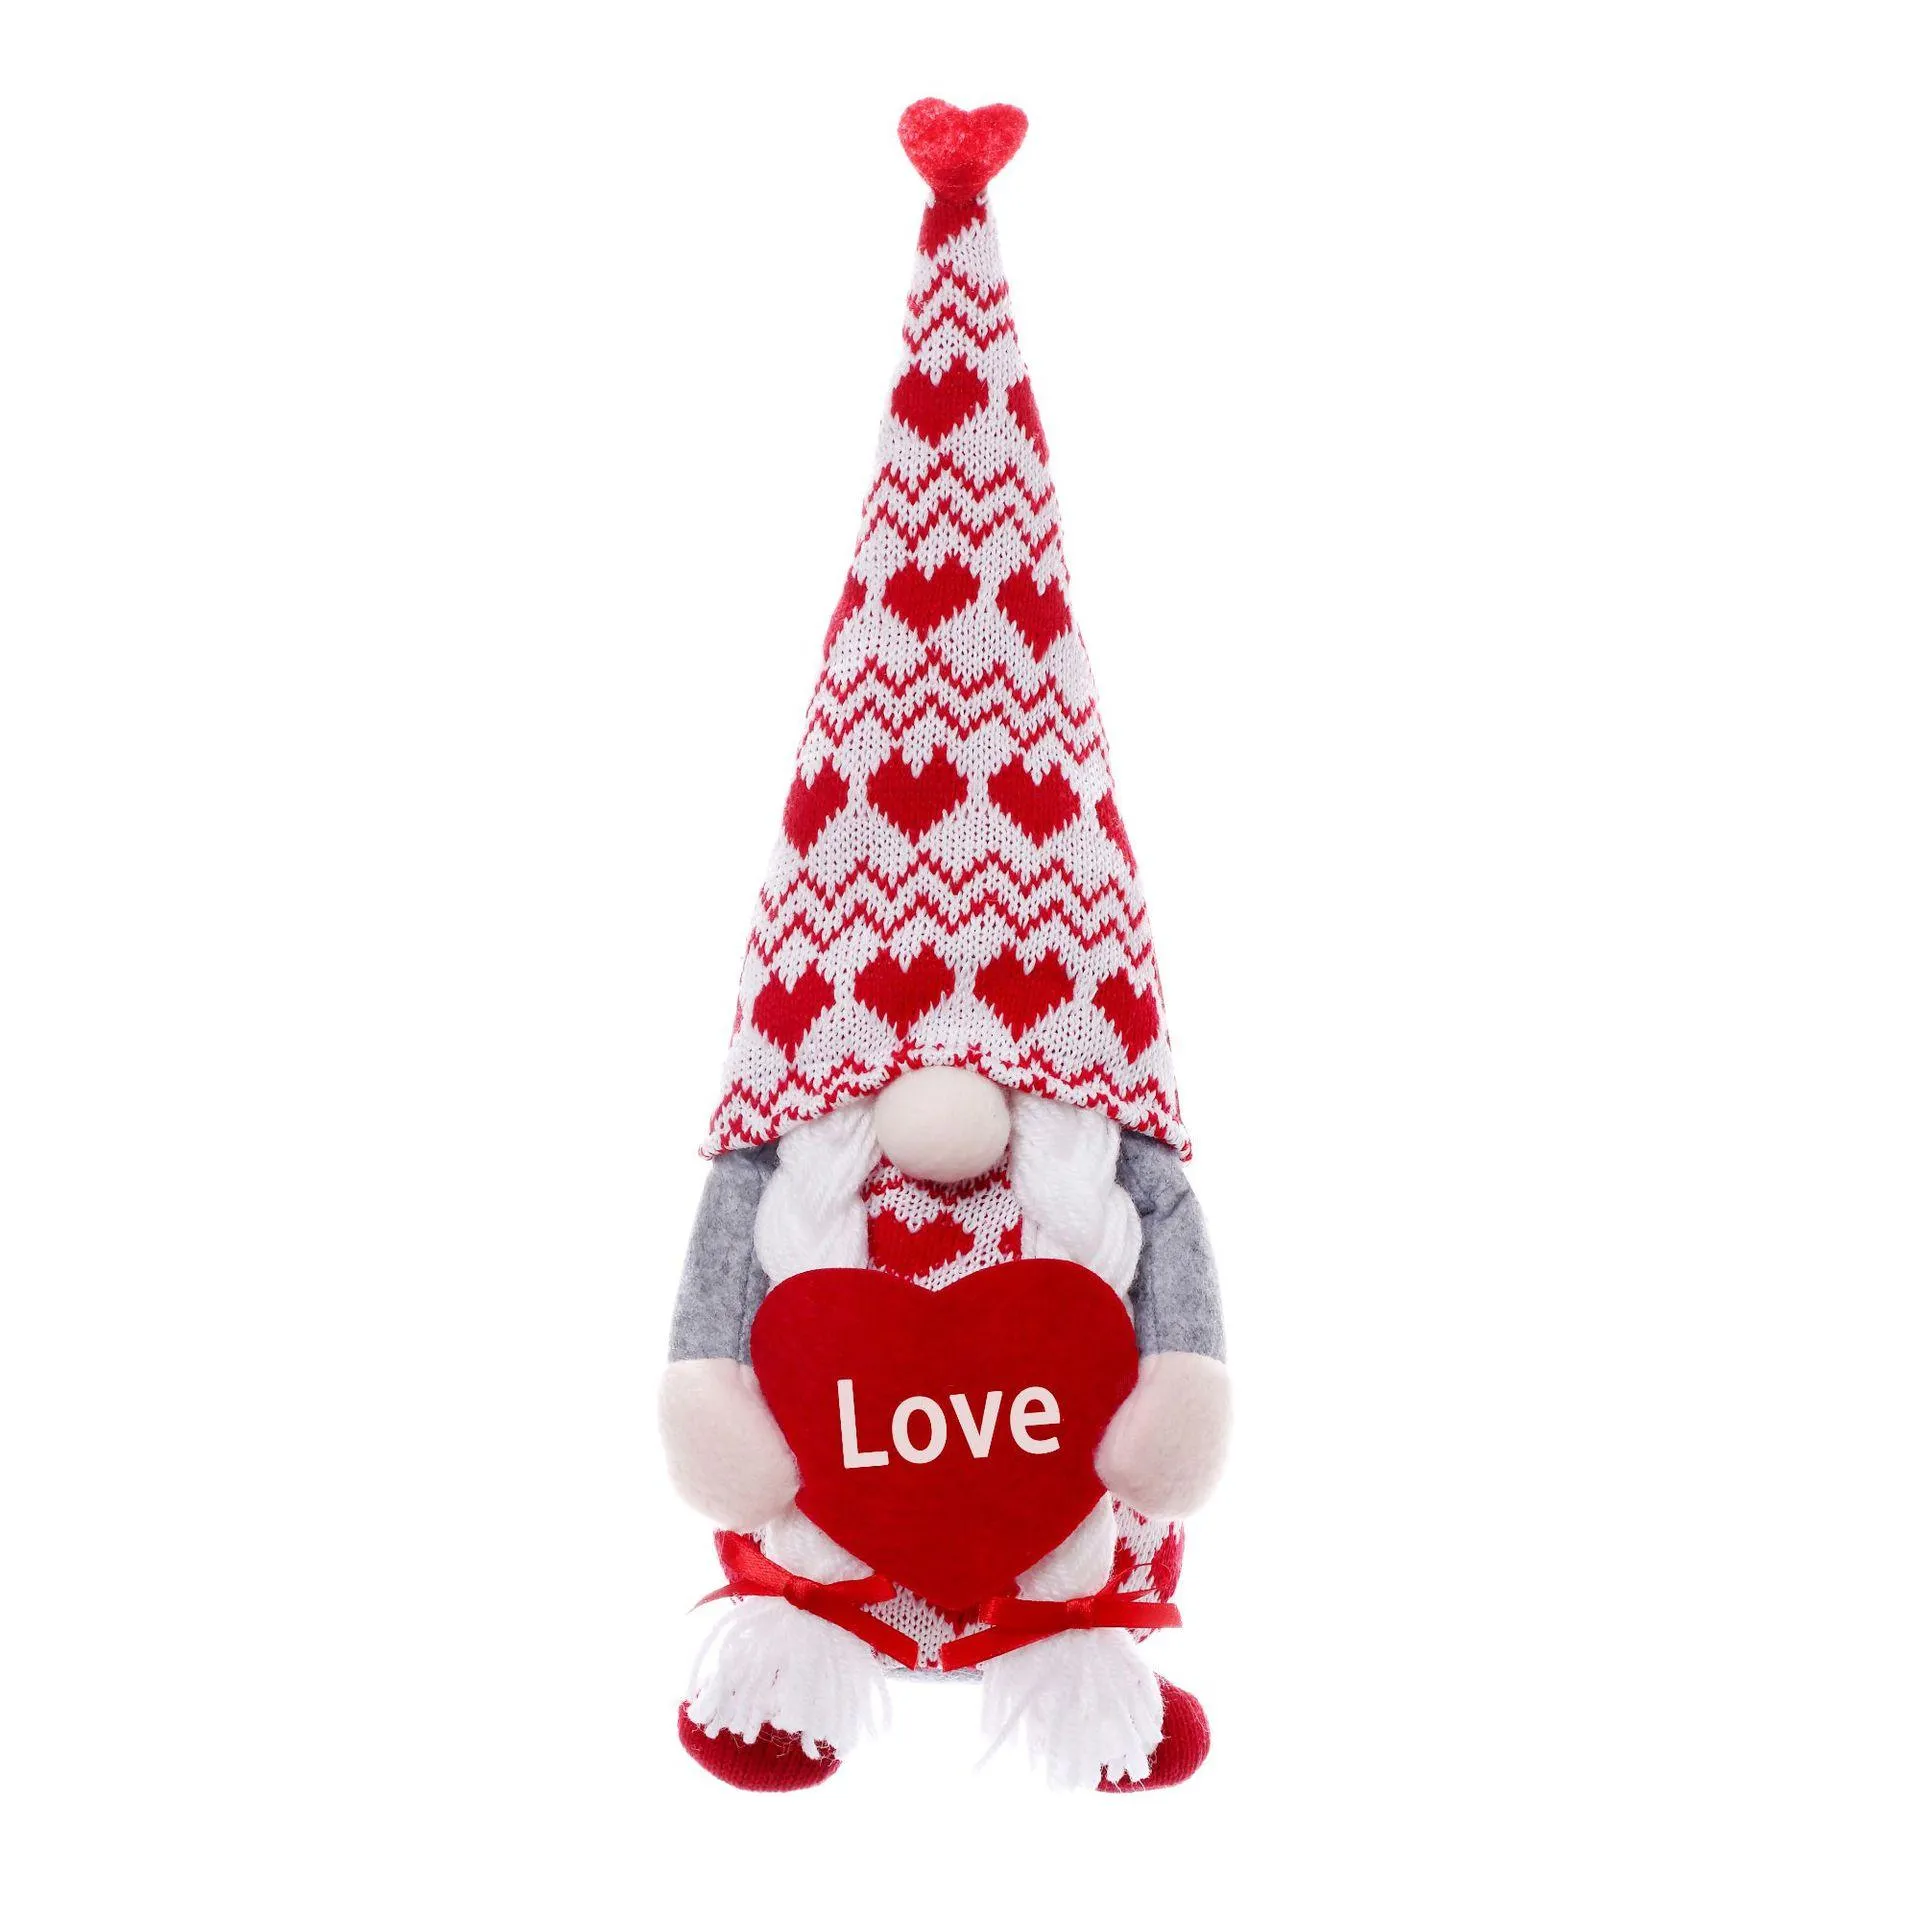 2021 Party Favorit Faceless Doll Valentine Day Dekorationer Lite Figurälskare Ornament Dwarf Cupid Rudolph Fönster Dekorativ docka